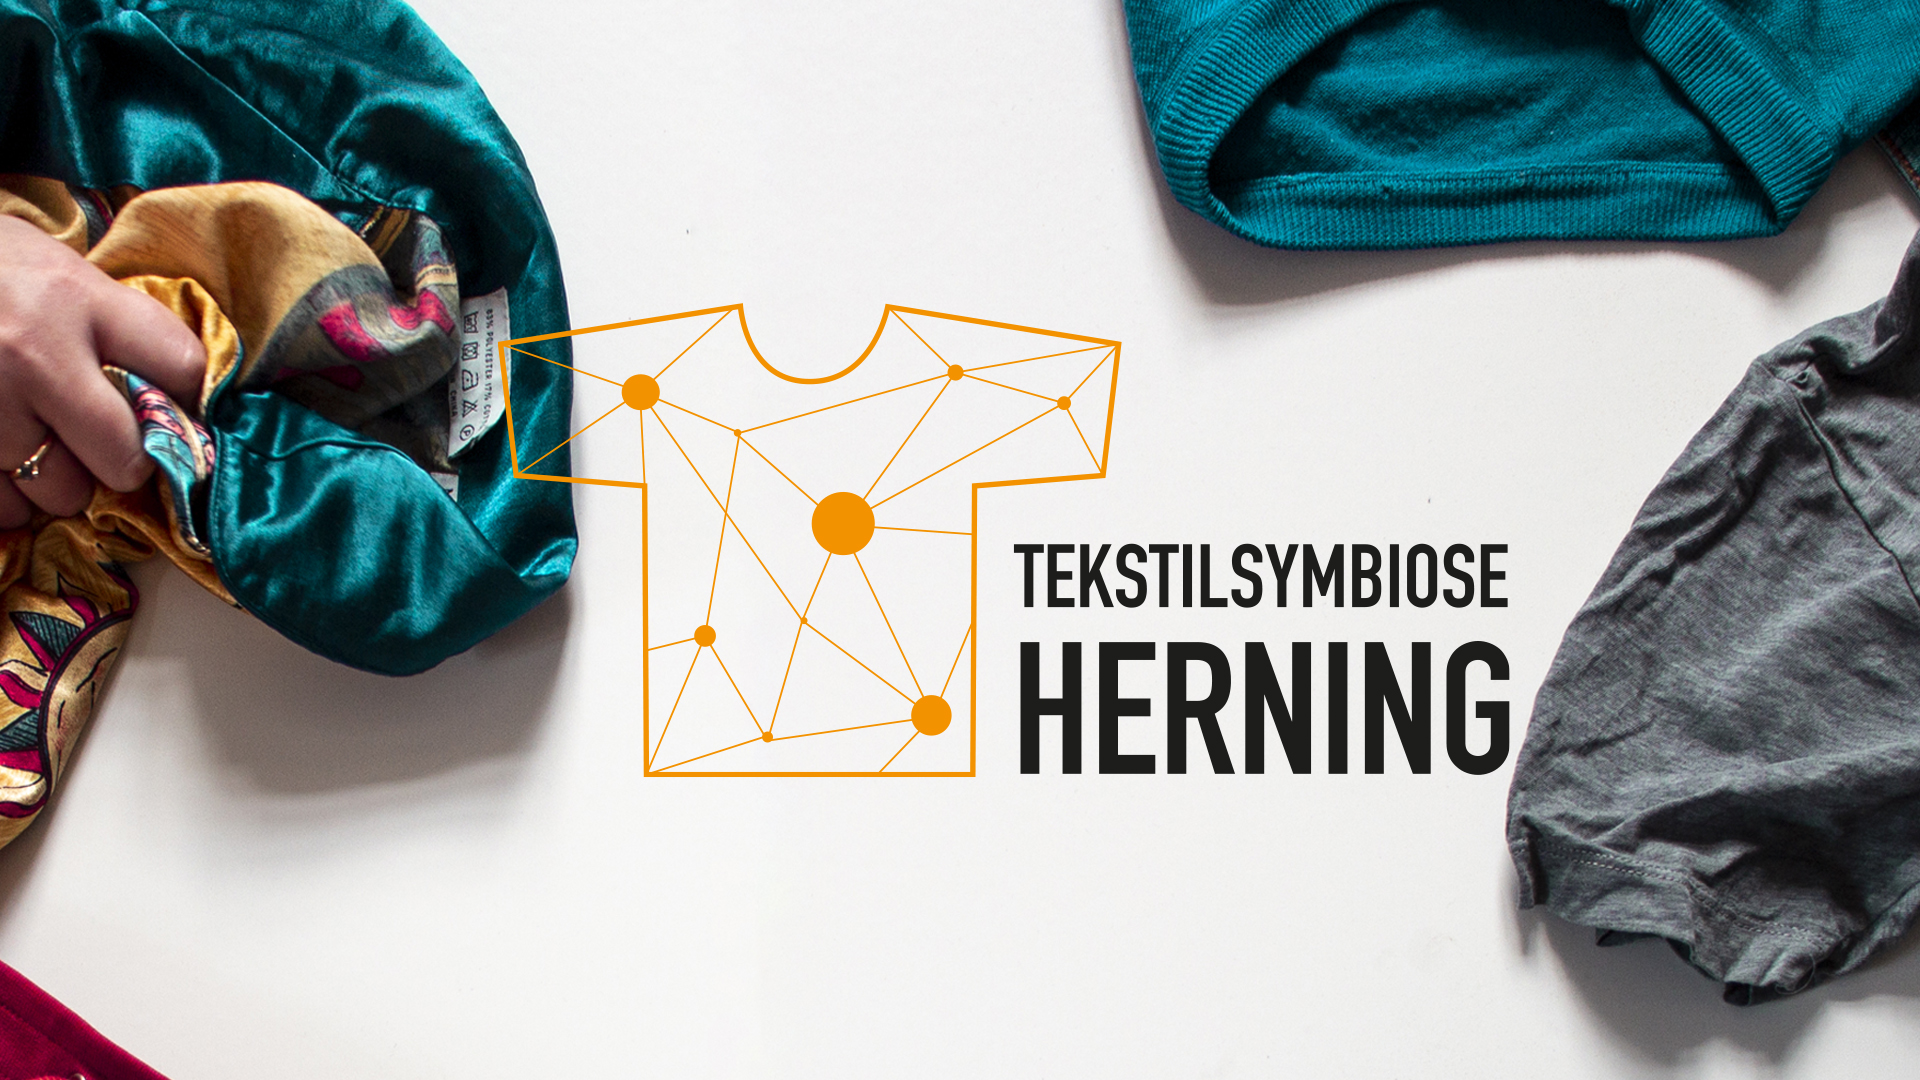 Textile Symbiosis Herning